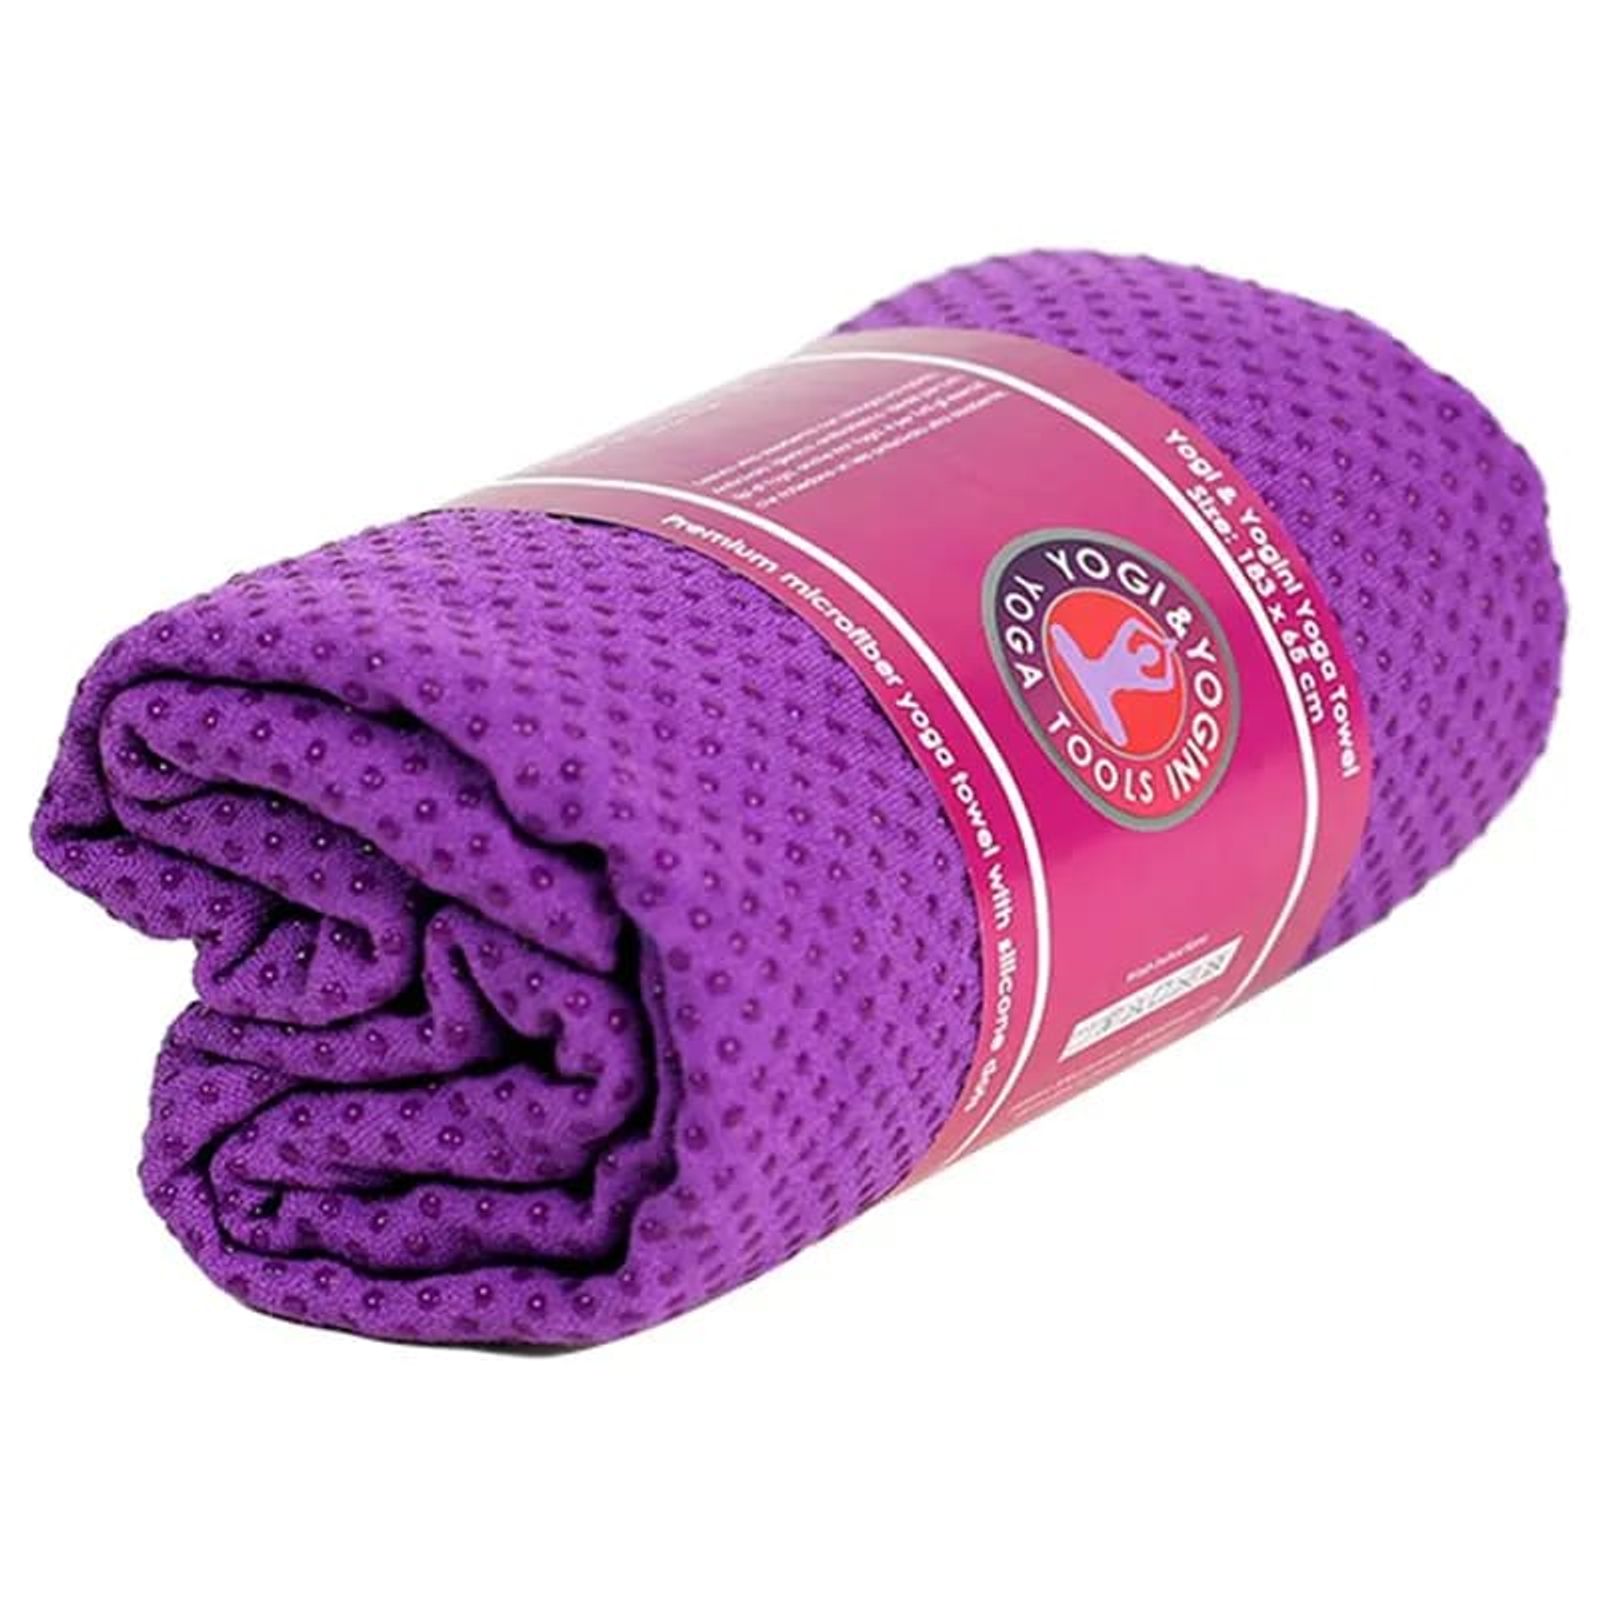 Yoga Handtuch rutschfest violett Sil. -- 500 g; 183x65 cm